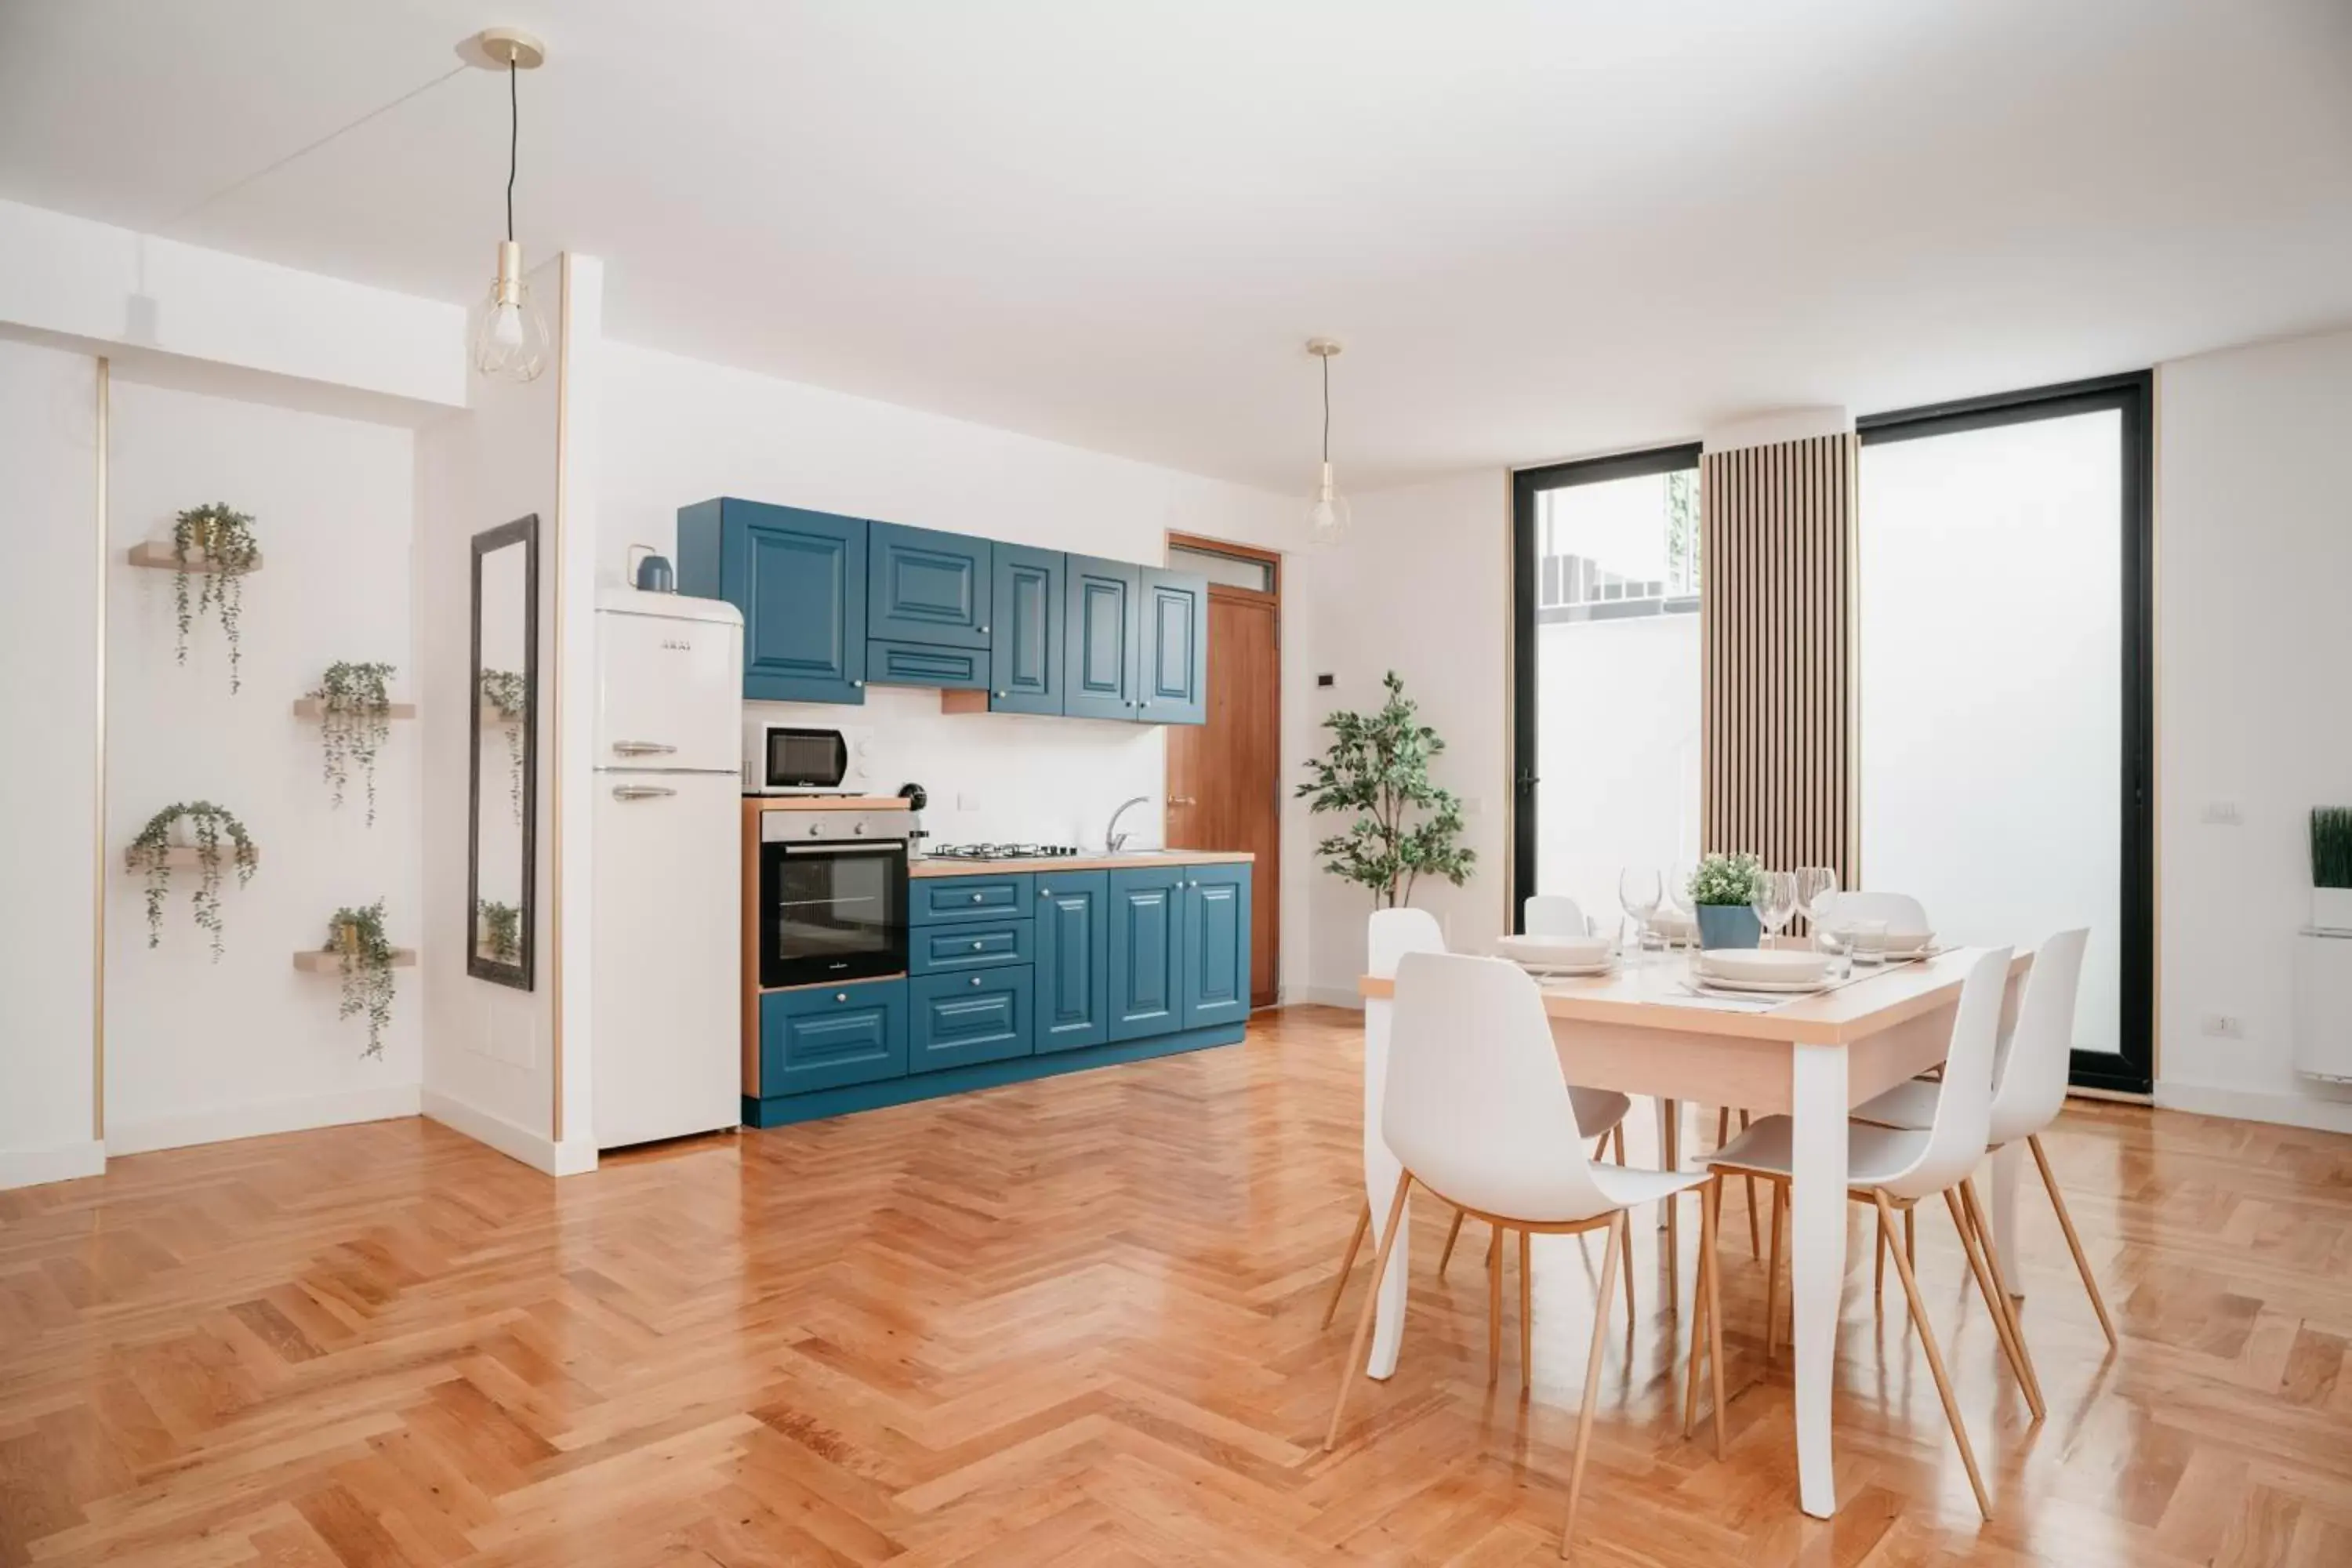 kitchen, Dining Area in Vista Napoli Residence by Casa Napoletana